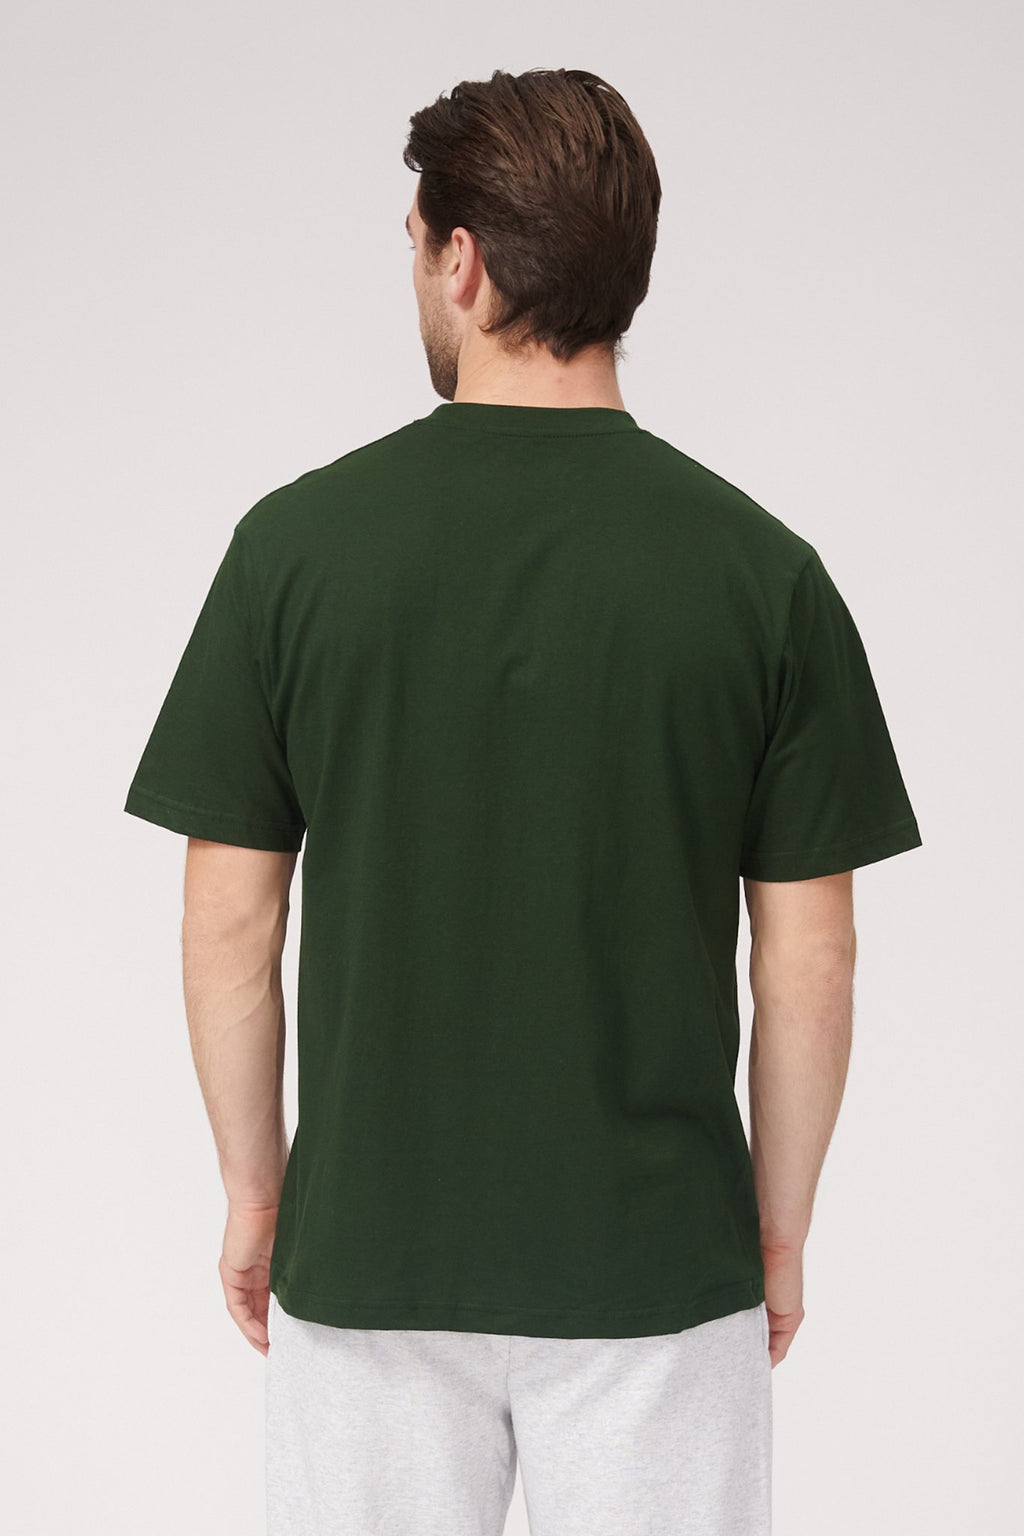 Übergroßes T -Shirt - dunkelgrün